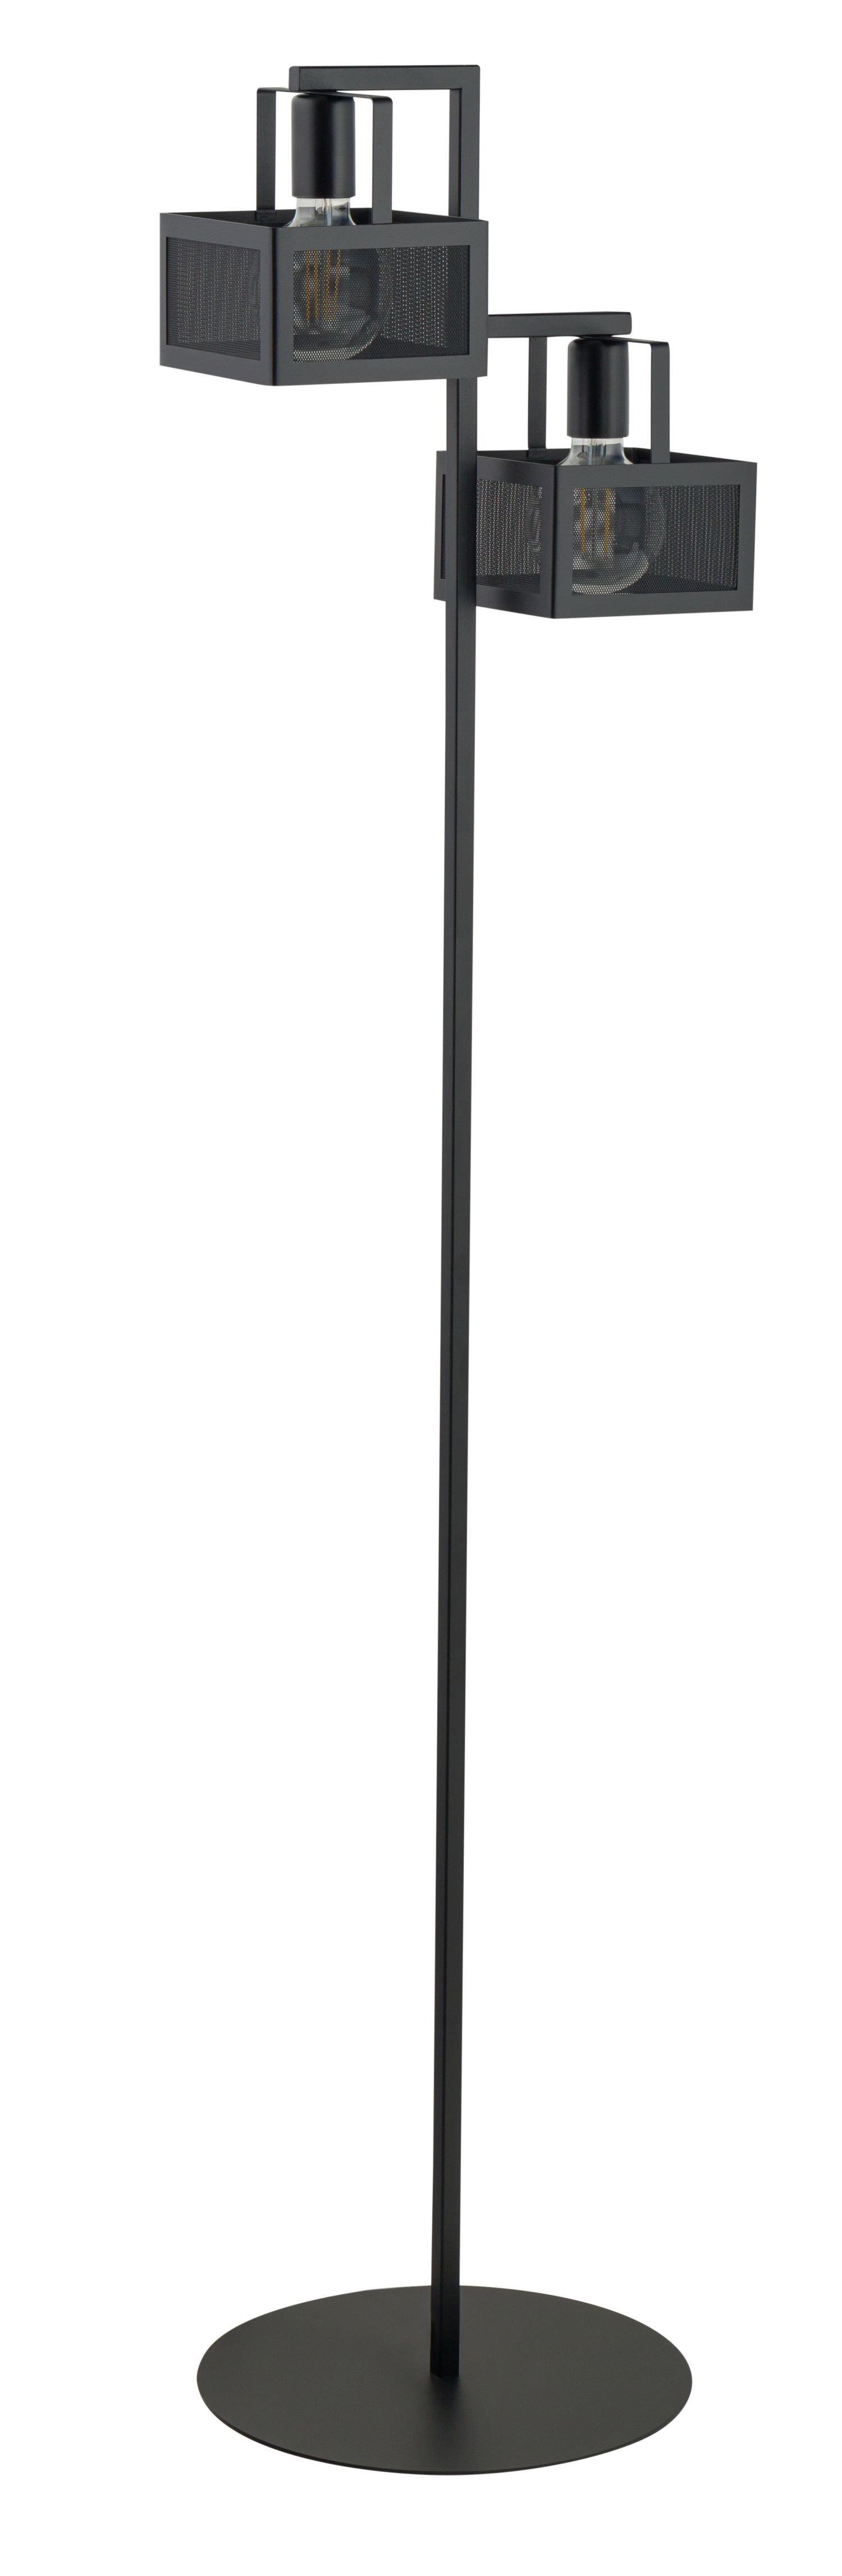 Schwarze Stehlampe Metall E27 groß 160 cm 2-flammig